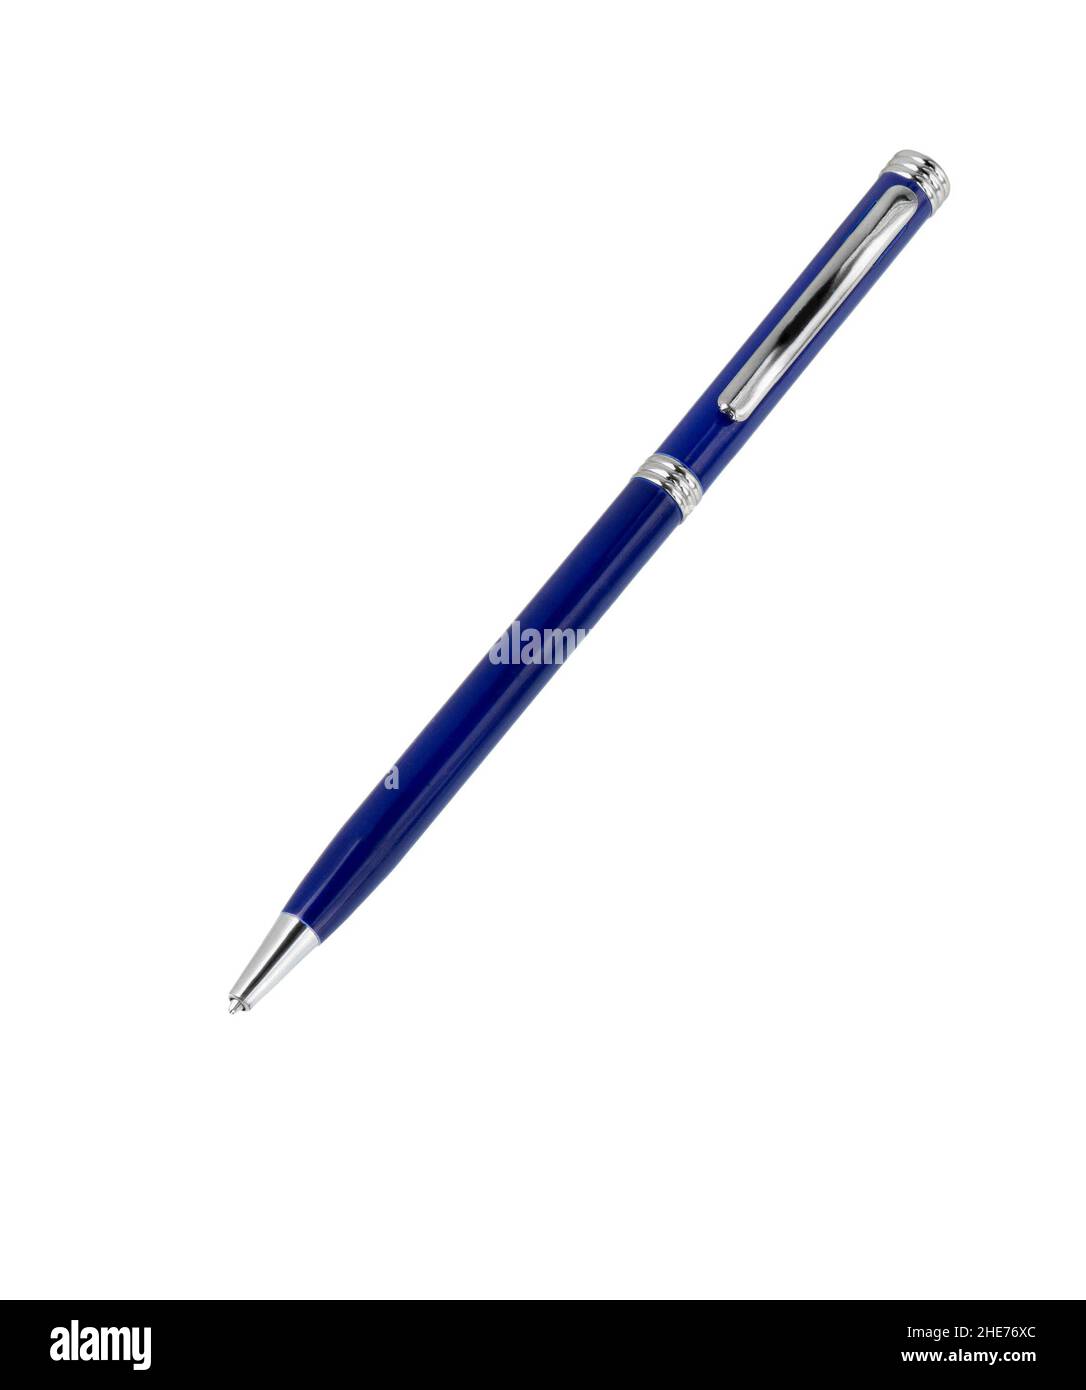 Penna Metal Blue isolata su sfondo bianco. Penna a sfera blu tagliata. Penna biro monouso metallica. Foto Stock